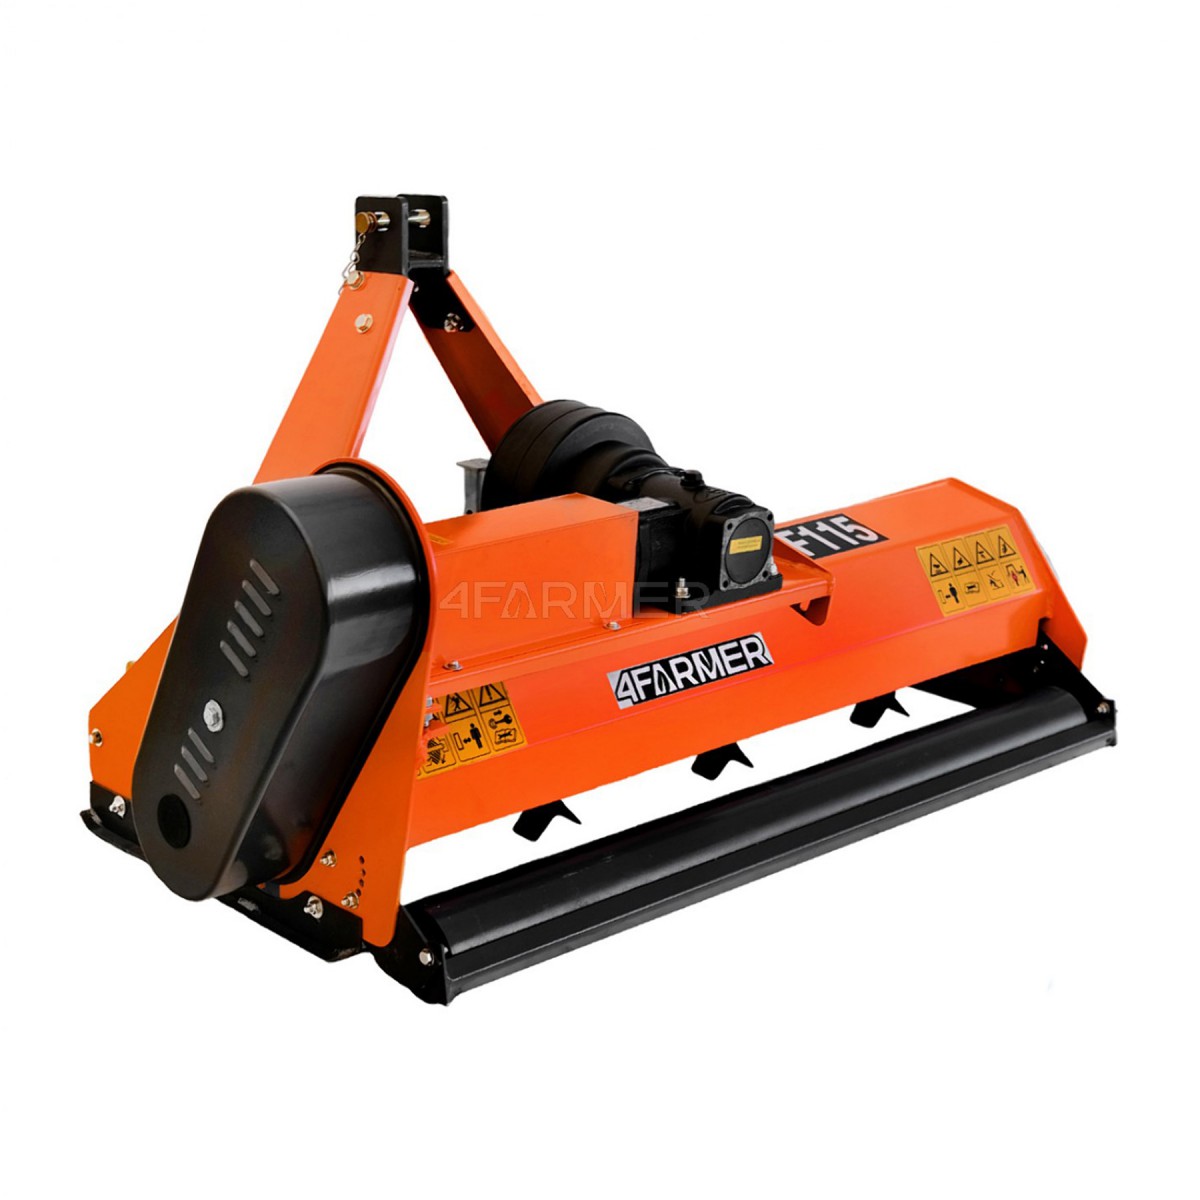 Flail mower EF 125 4FARMER - orange